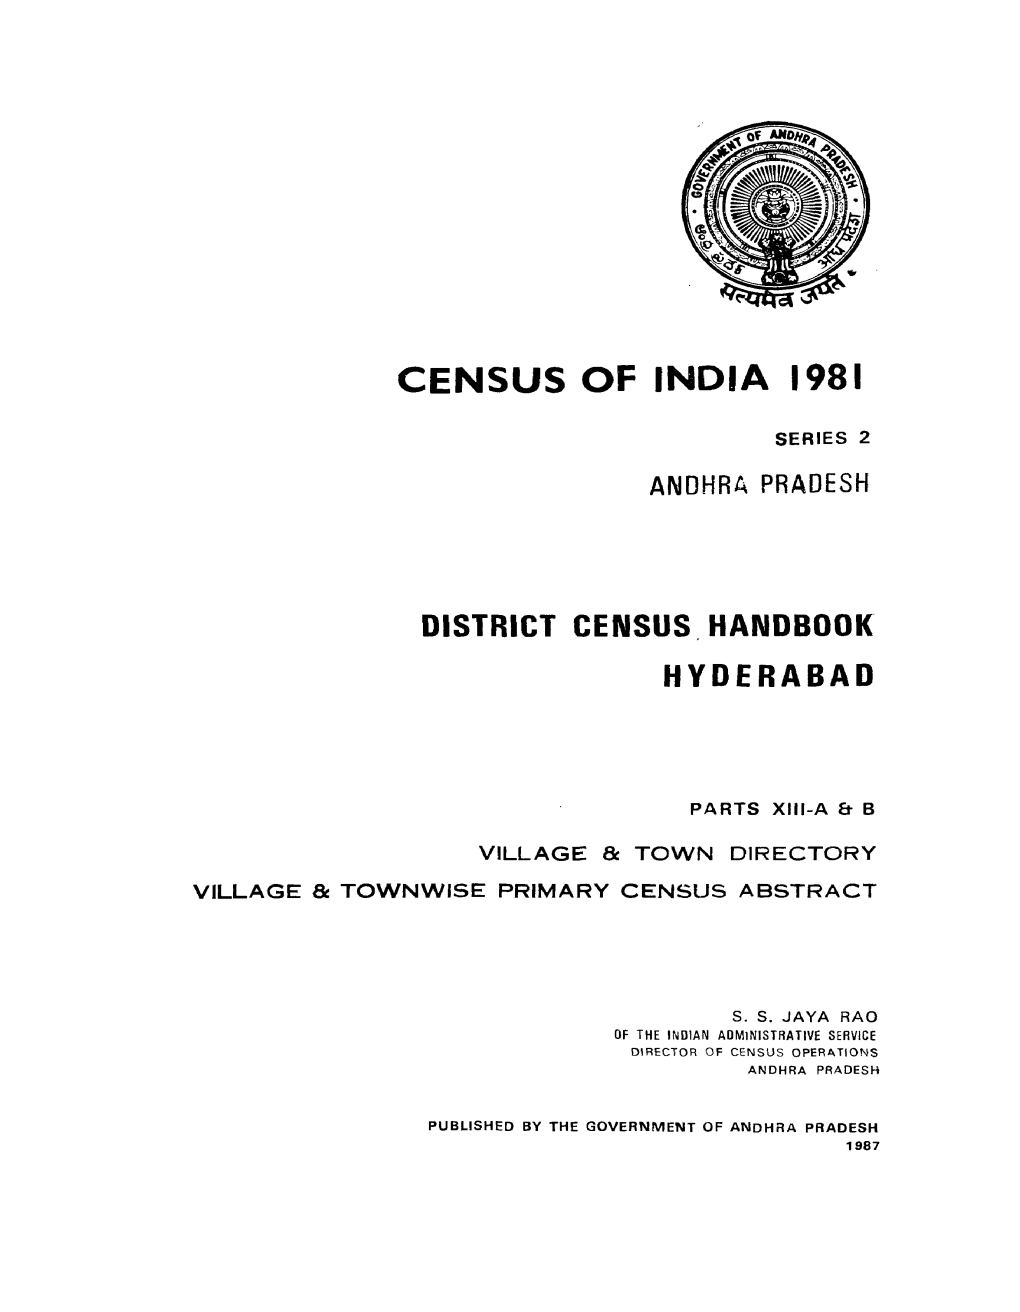 District Census Handbook, Hyderabad, Part XIII a & B, Series-2